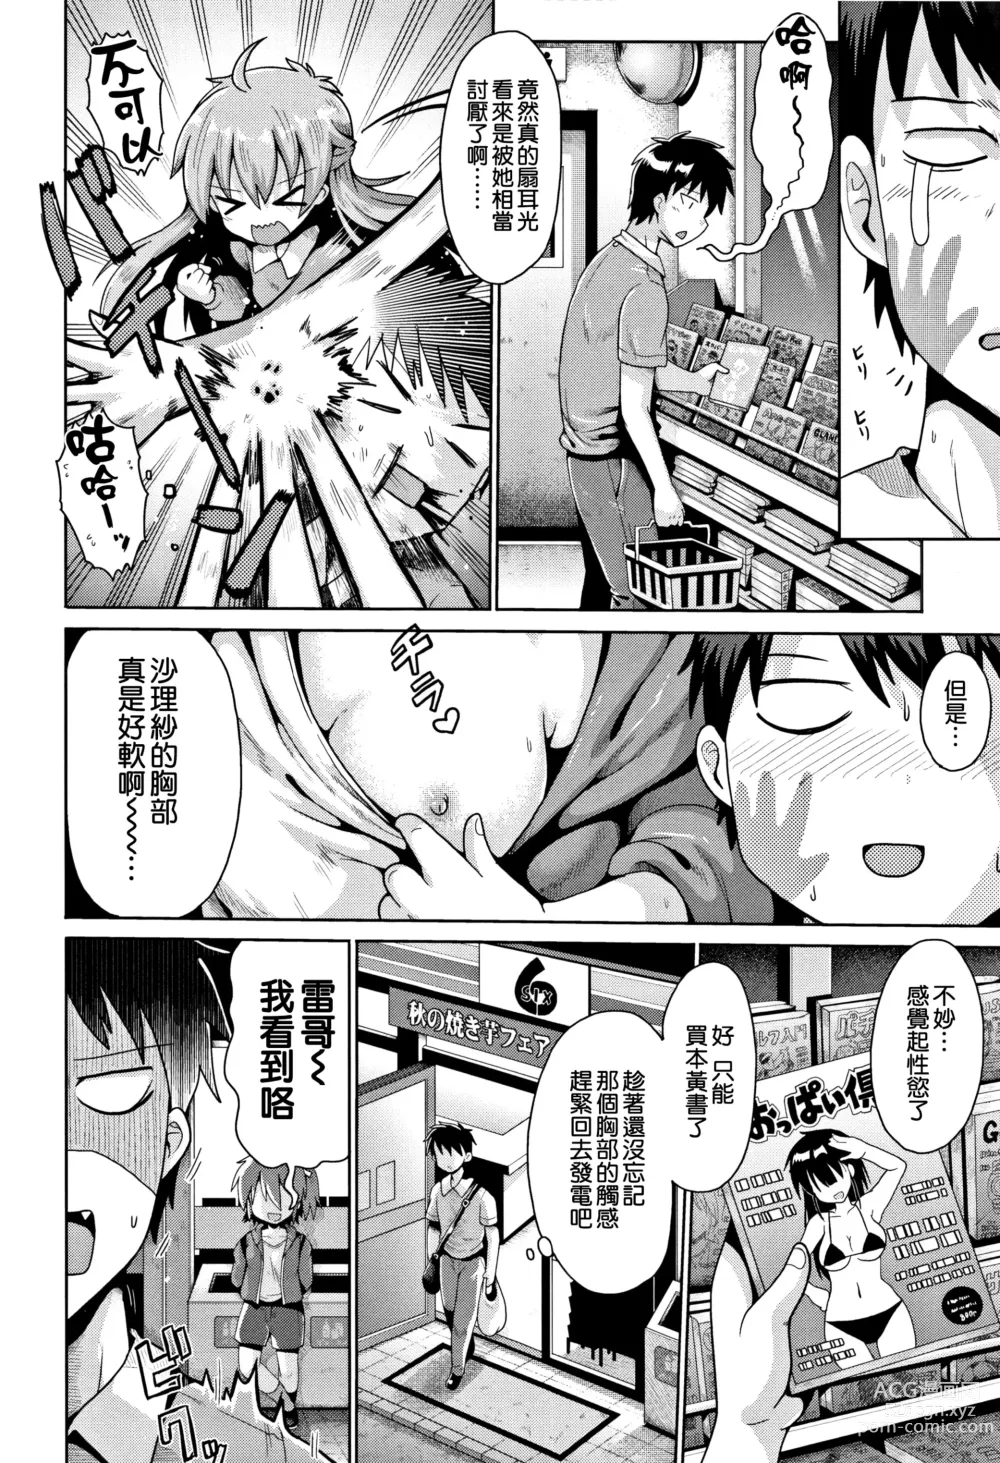 Page 7 of manga Trident 1 + 2 + 3